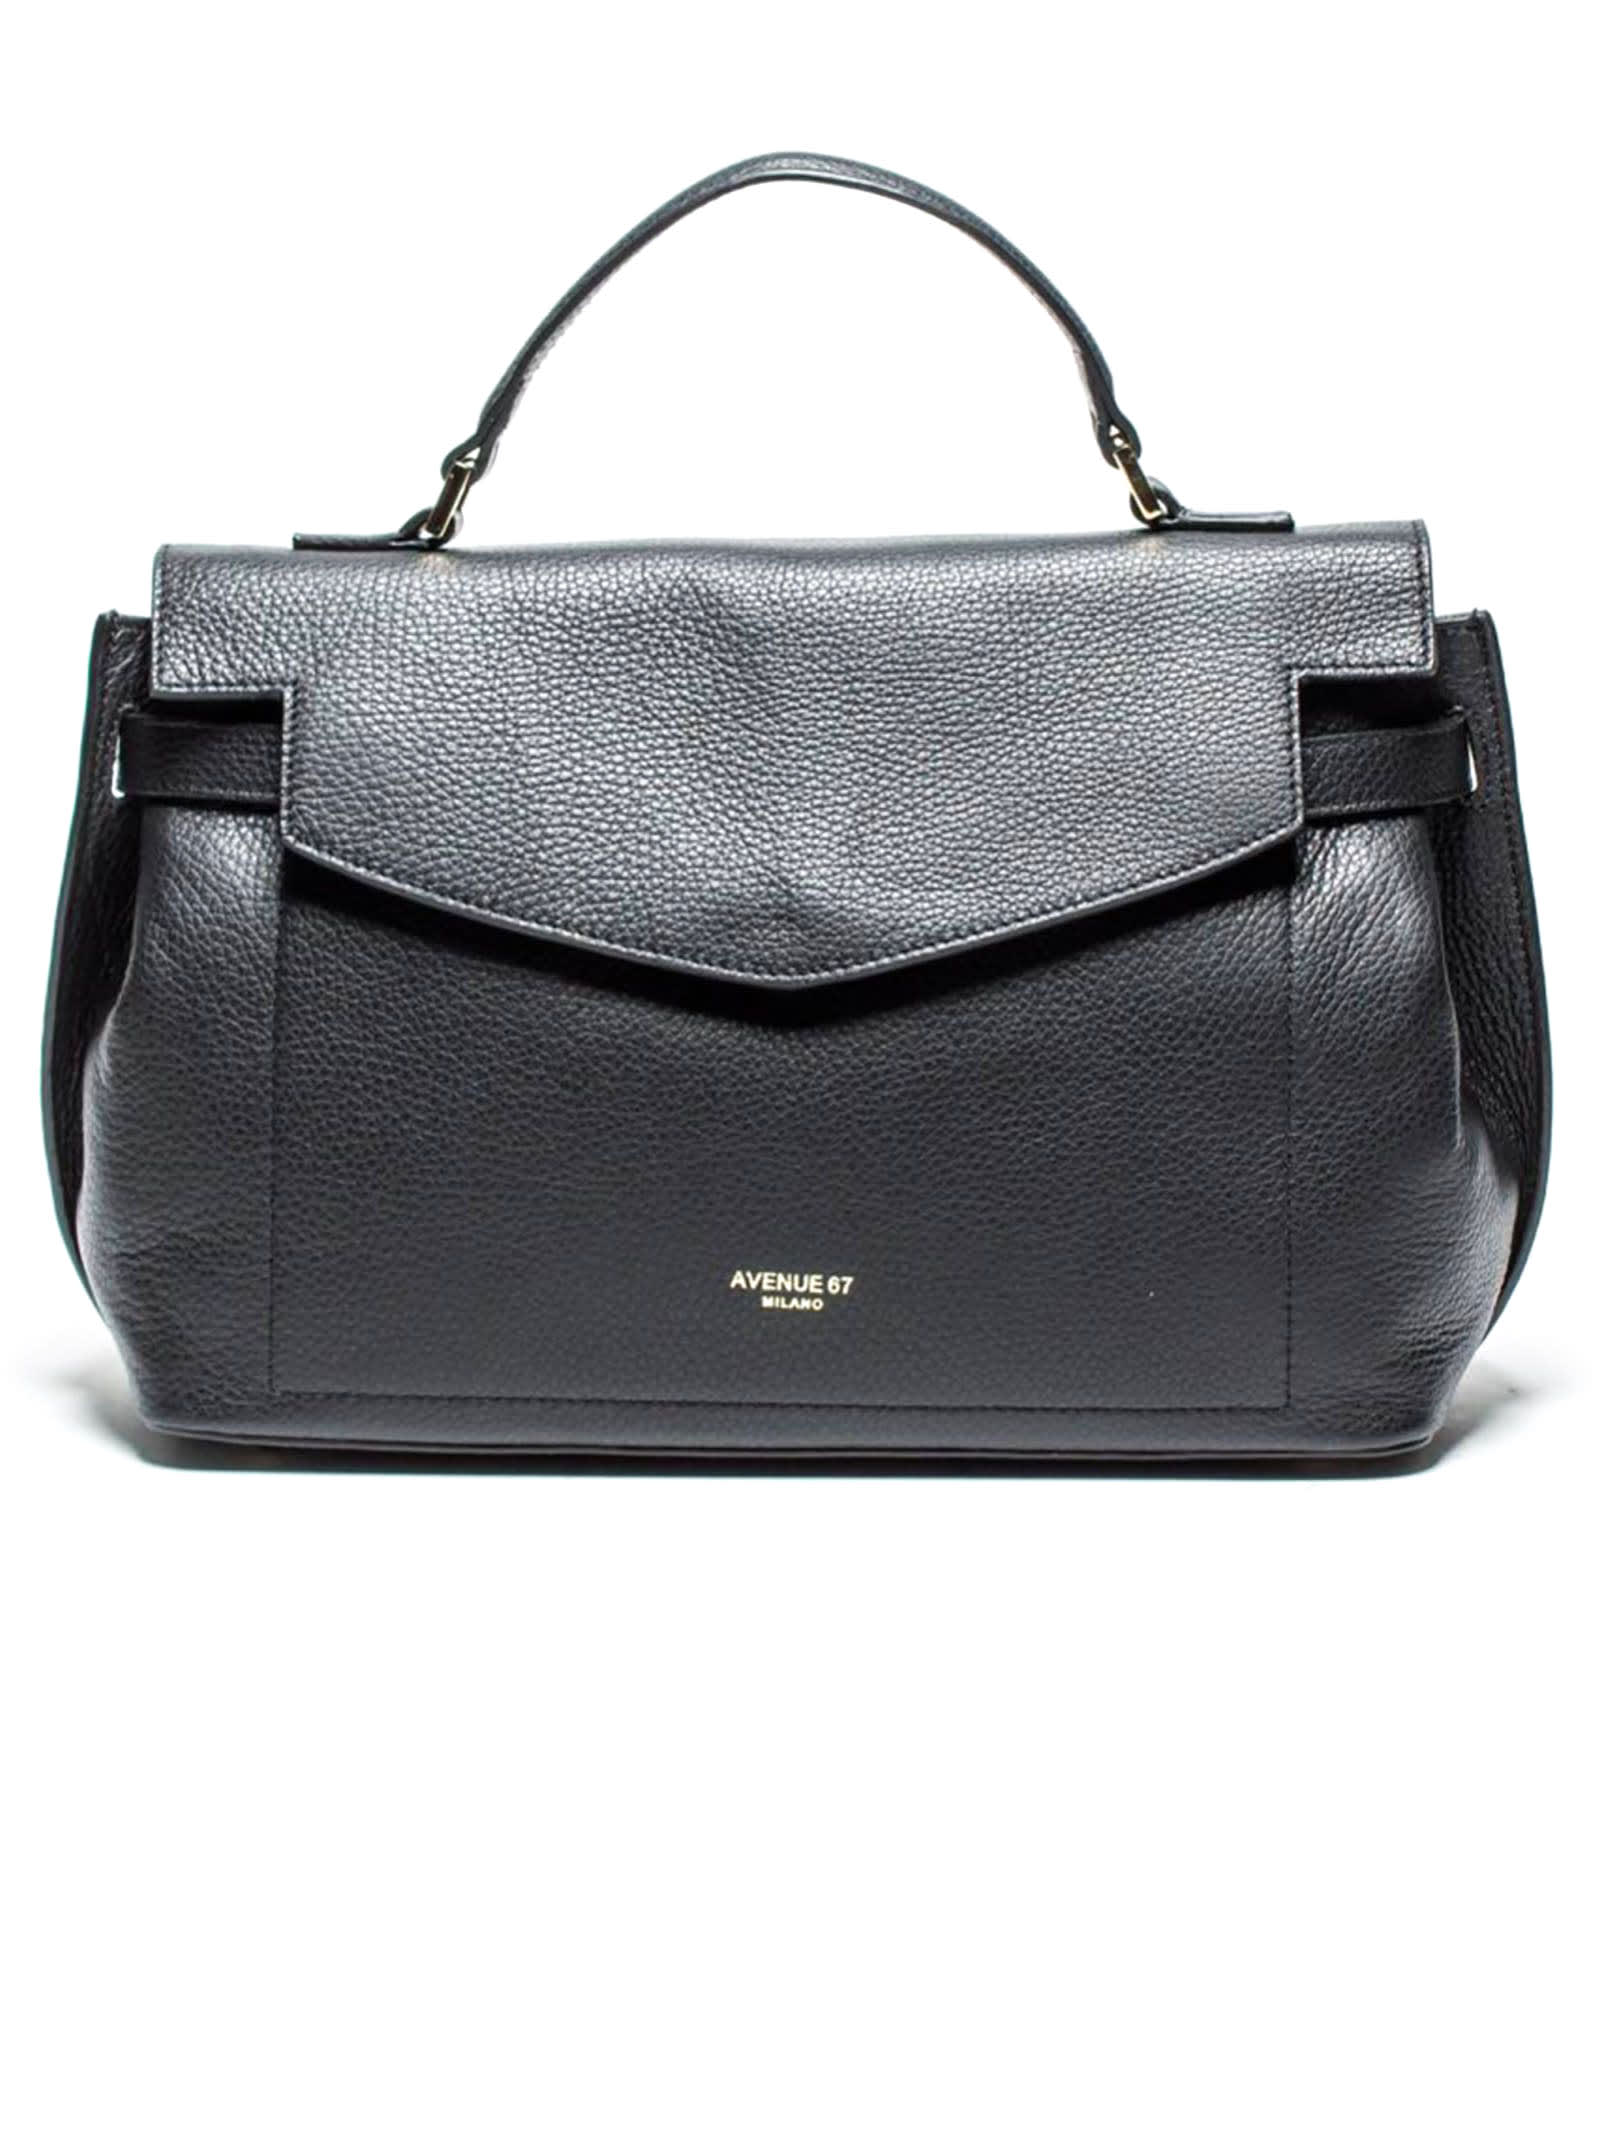 Avenue 67 Black Leather Dolly Bag